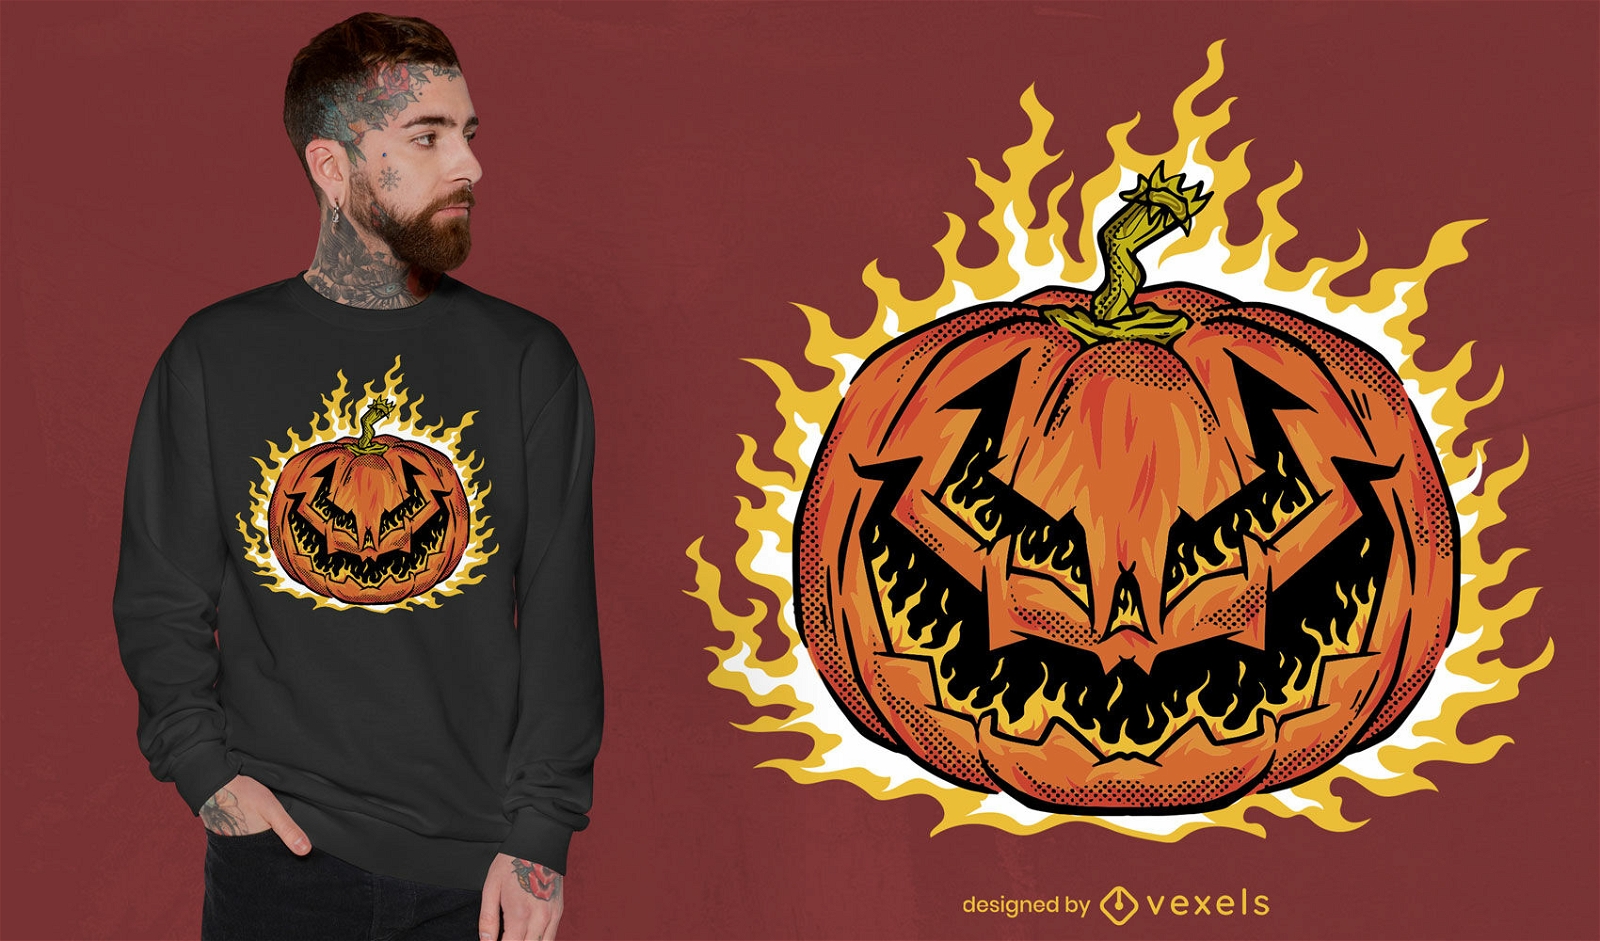 Spooky Halloween Jack O' lantern t-shirt design